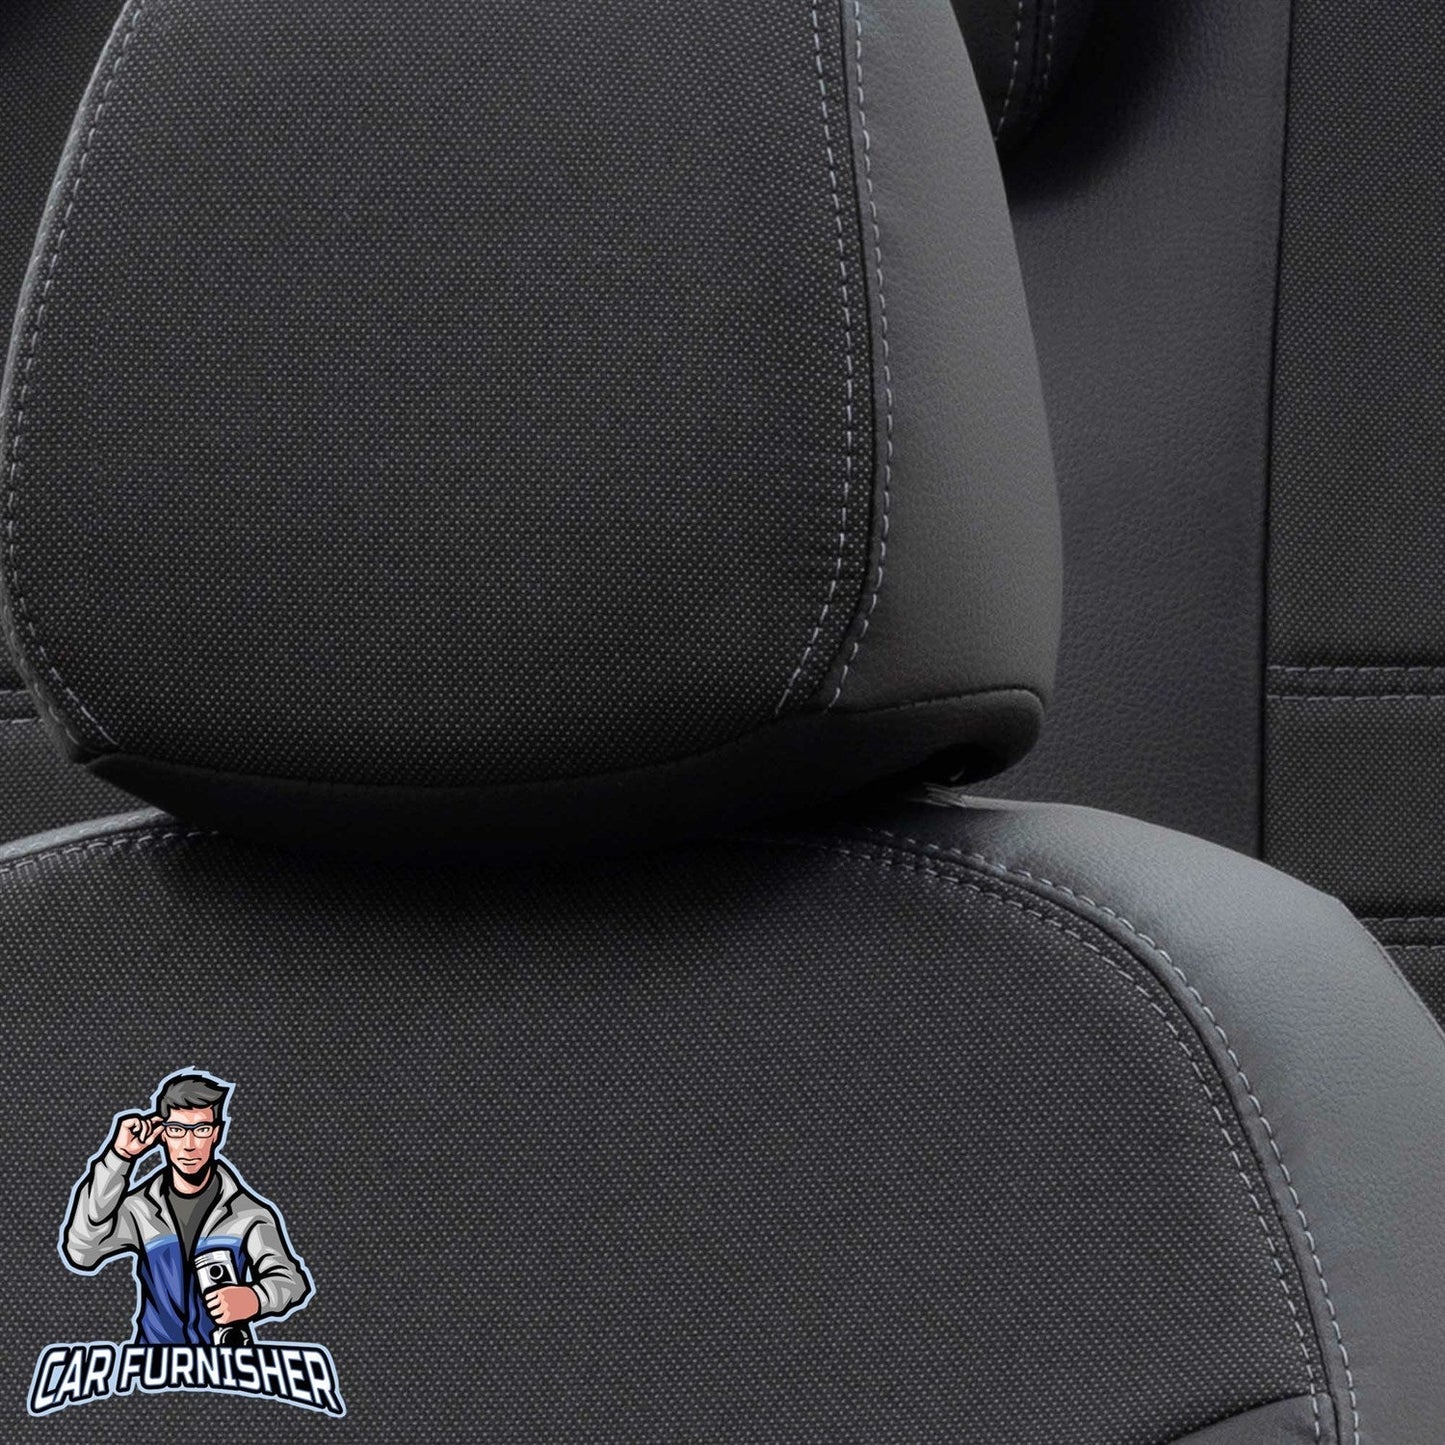 Peugeot 301 Seat Covers Paris Leather & Jacquard Design Black Leather & Jacquard Fabric